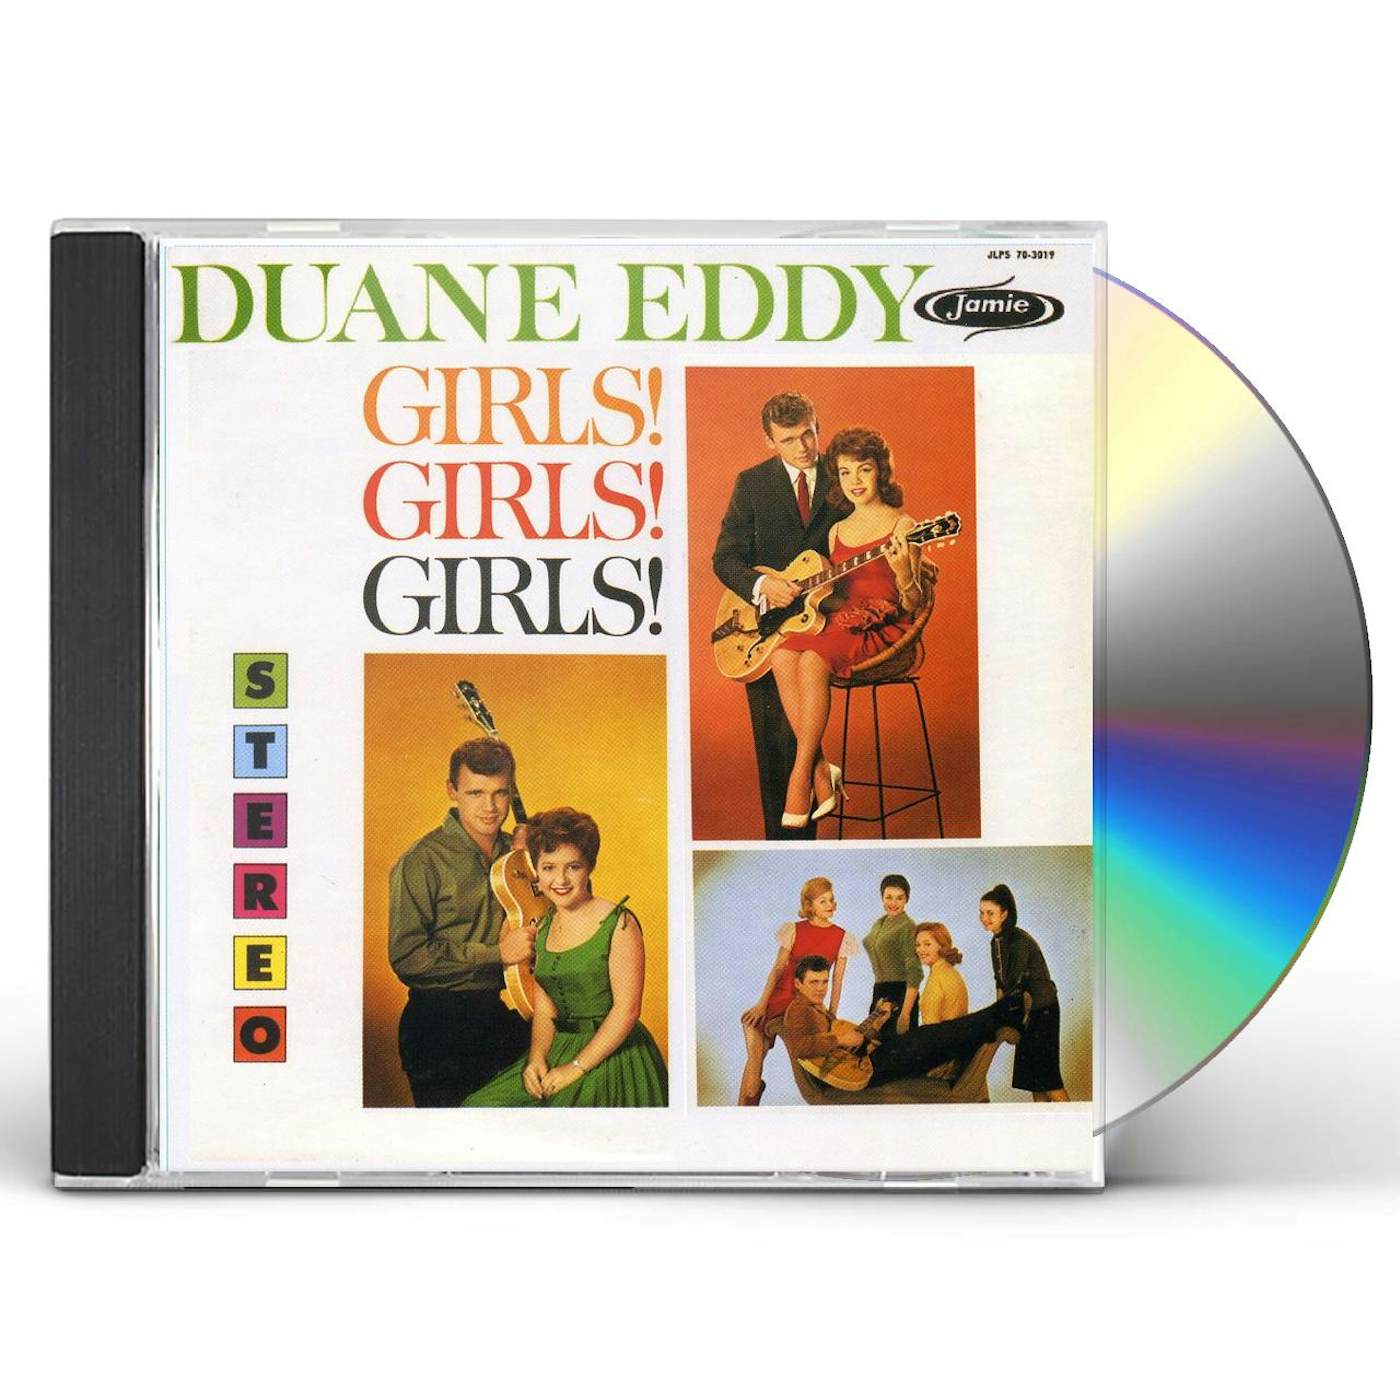 Eddy Duane GIRLS GIRLS GIRLS CD